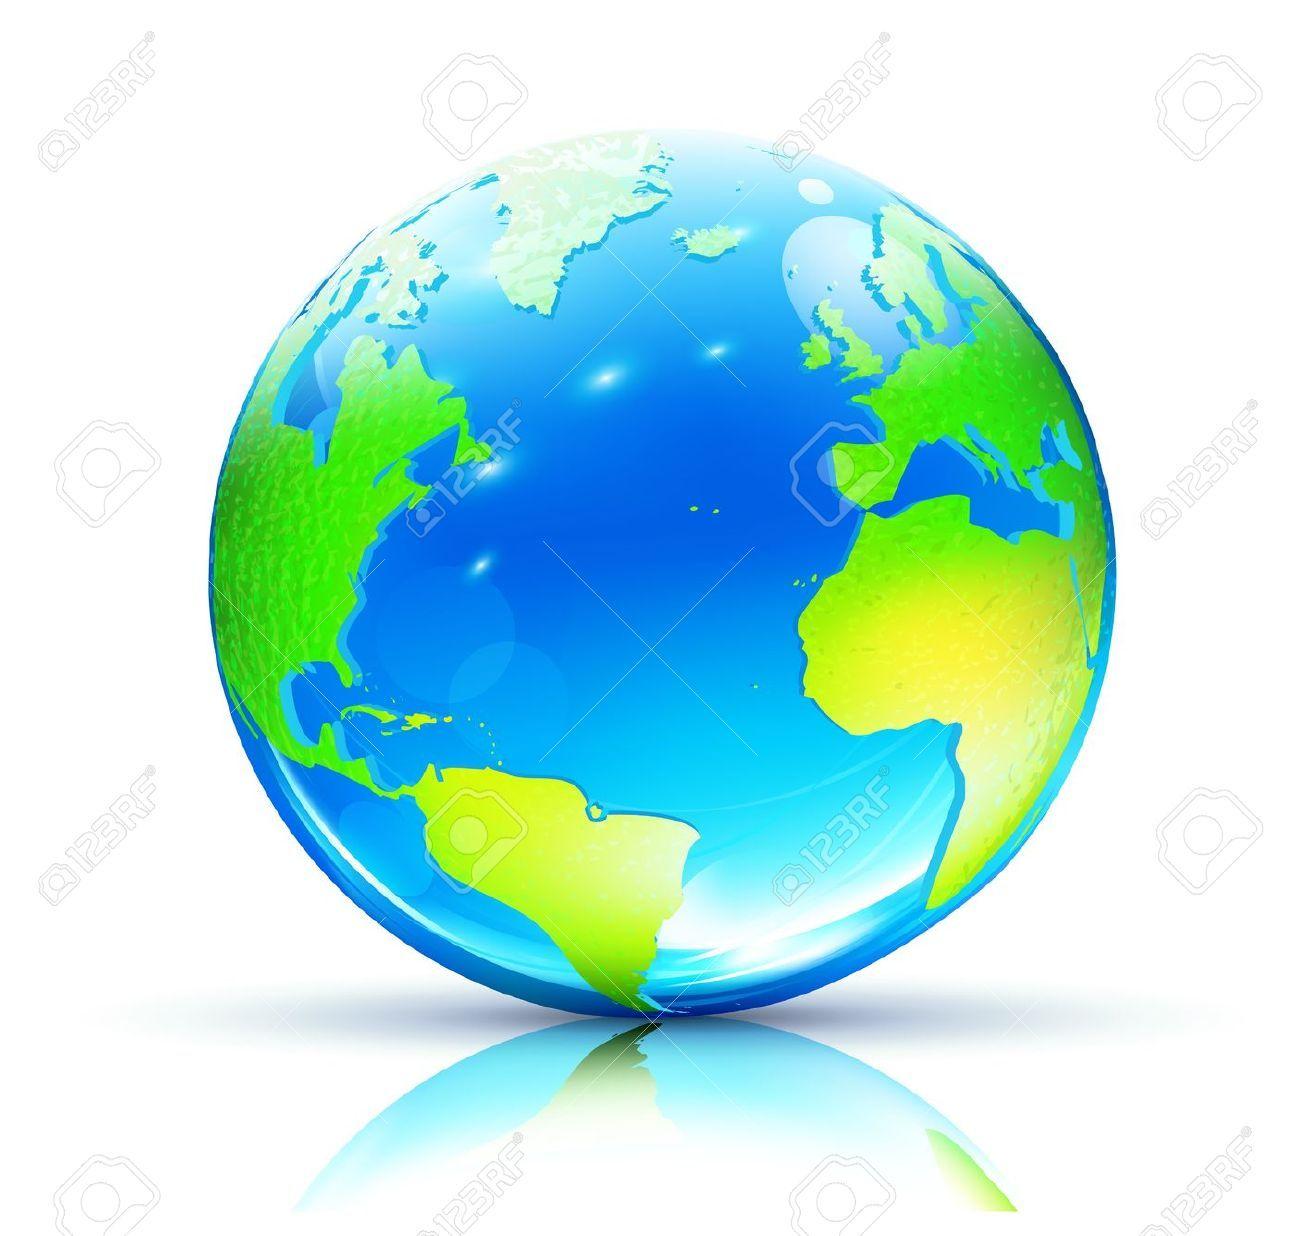 Transparent World Globe Logo - World globe map jpg royalty free stock - RR collections